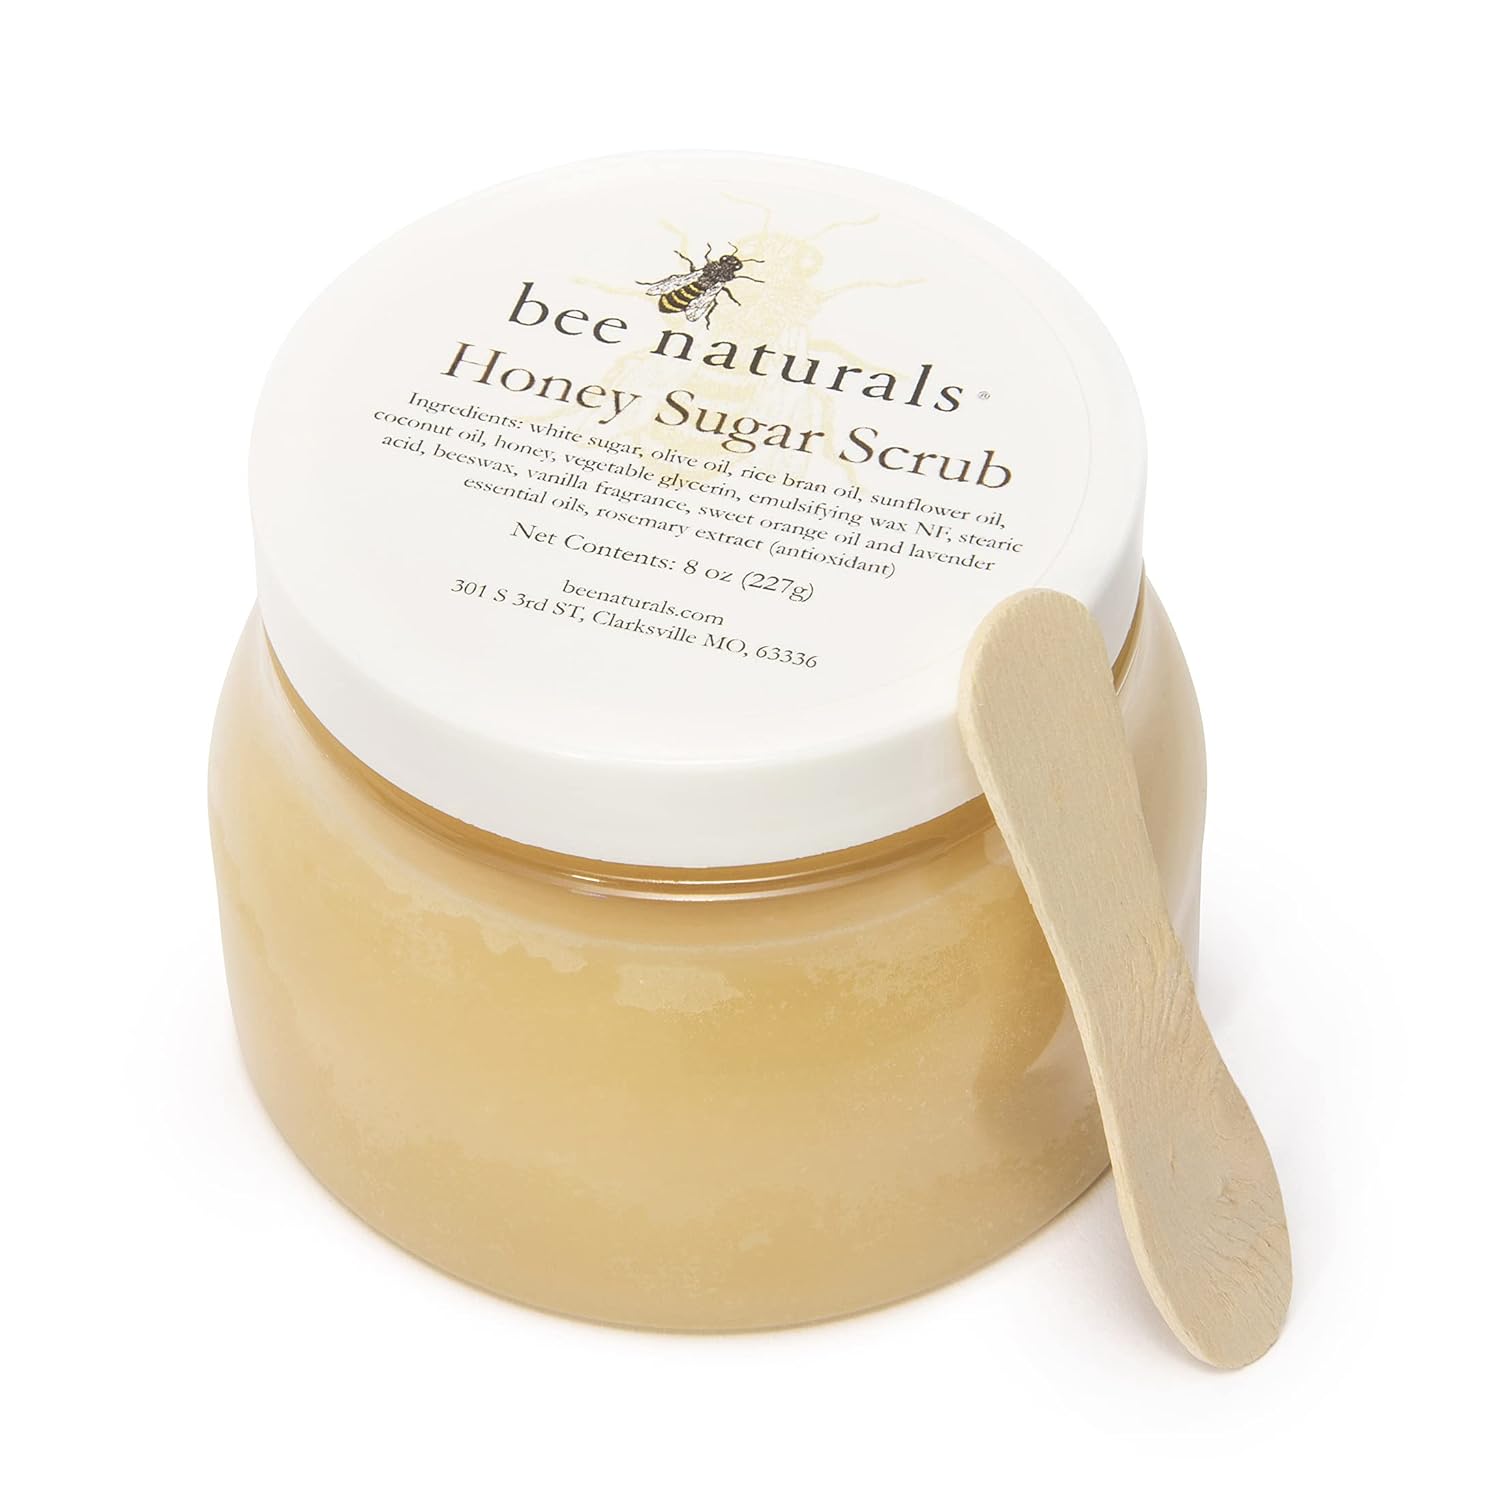 Luxurious Honey Sugar Scrub 8oz - Luminous Radiance - Gentle Exfoliating Blend for Face, Body & Feet with Coconut, Beeswax & Essential Oils -Signature Vanilla Fragrance- Nourishing, Moisturizing